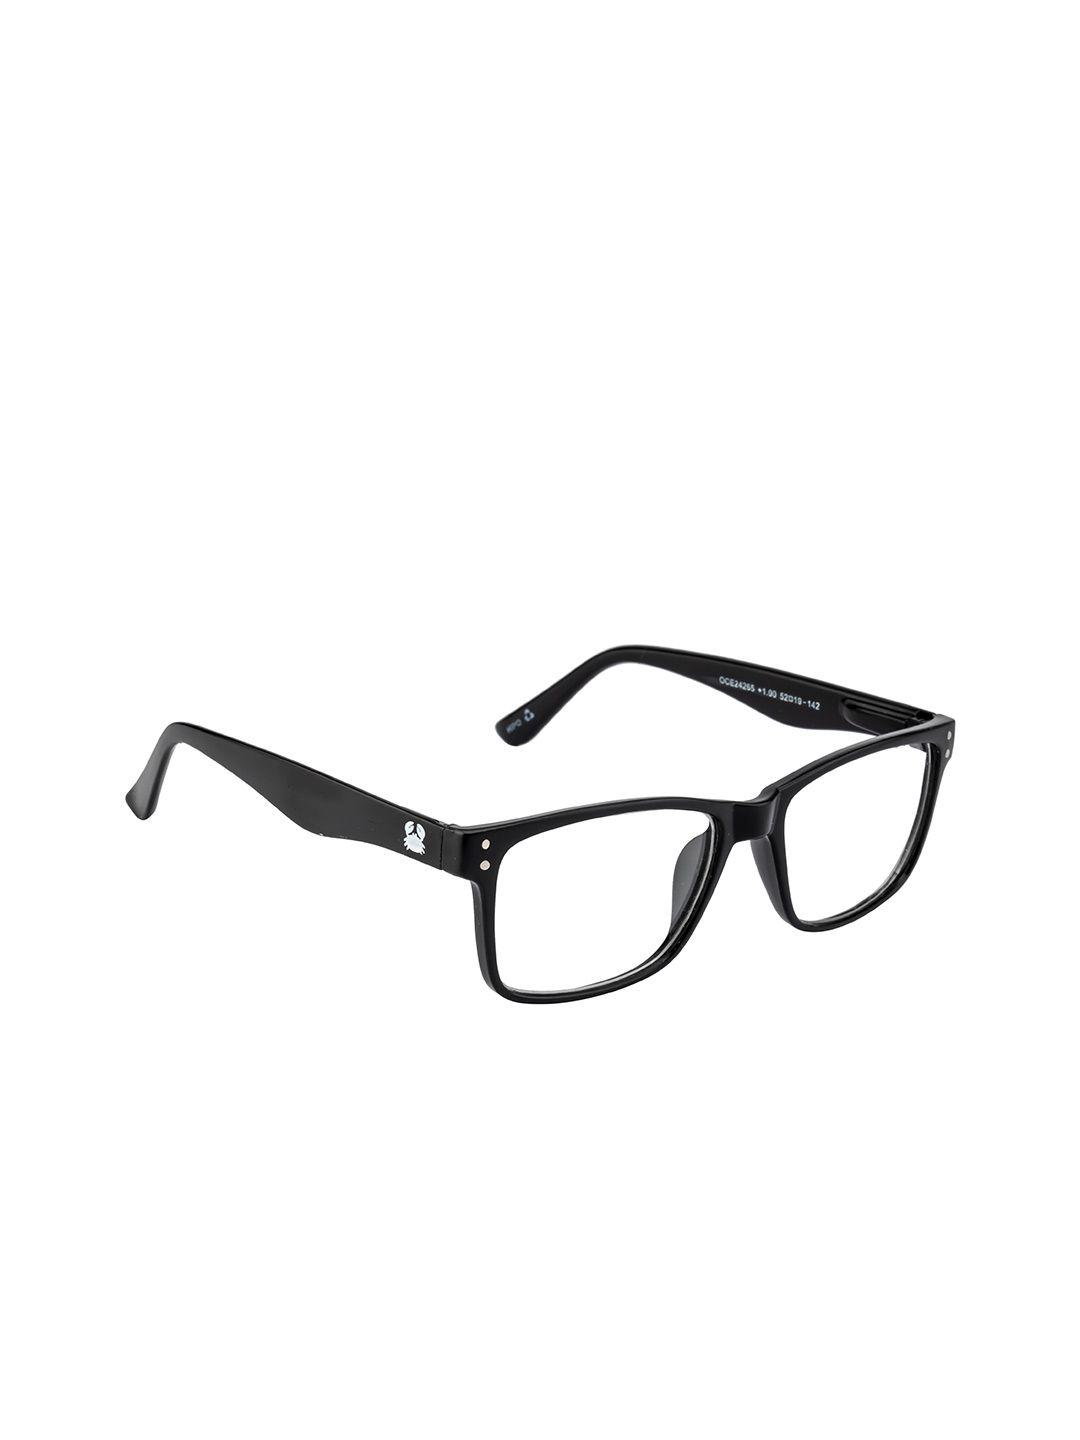 oceanides unisex clear lens & black rectangle sunglasses